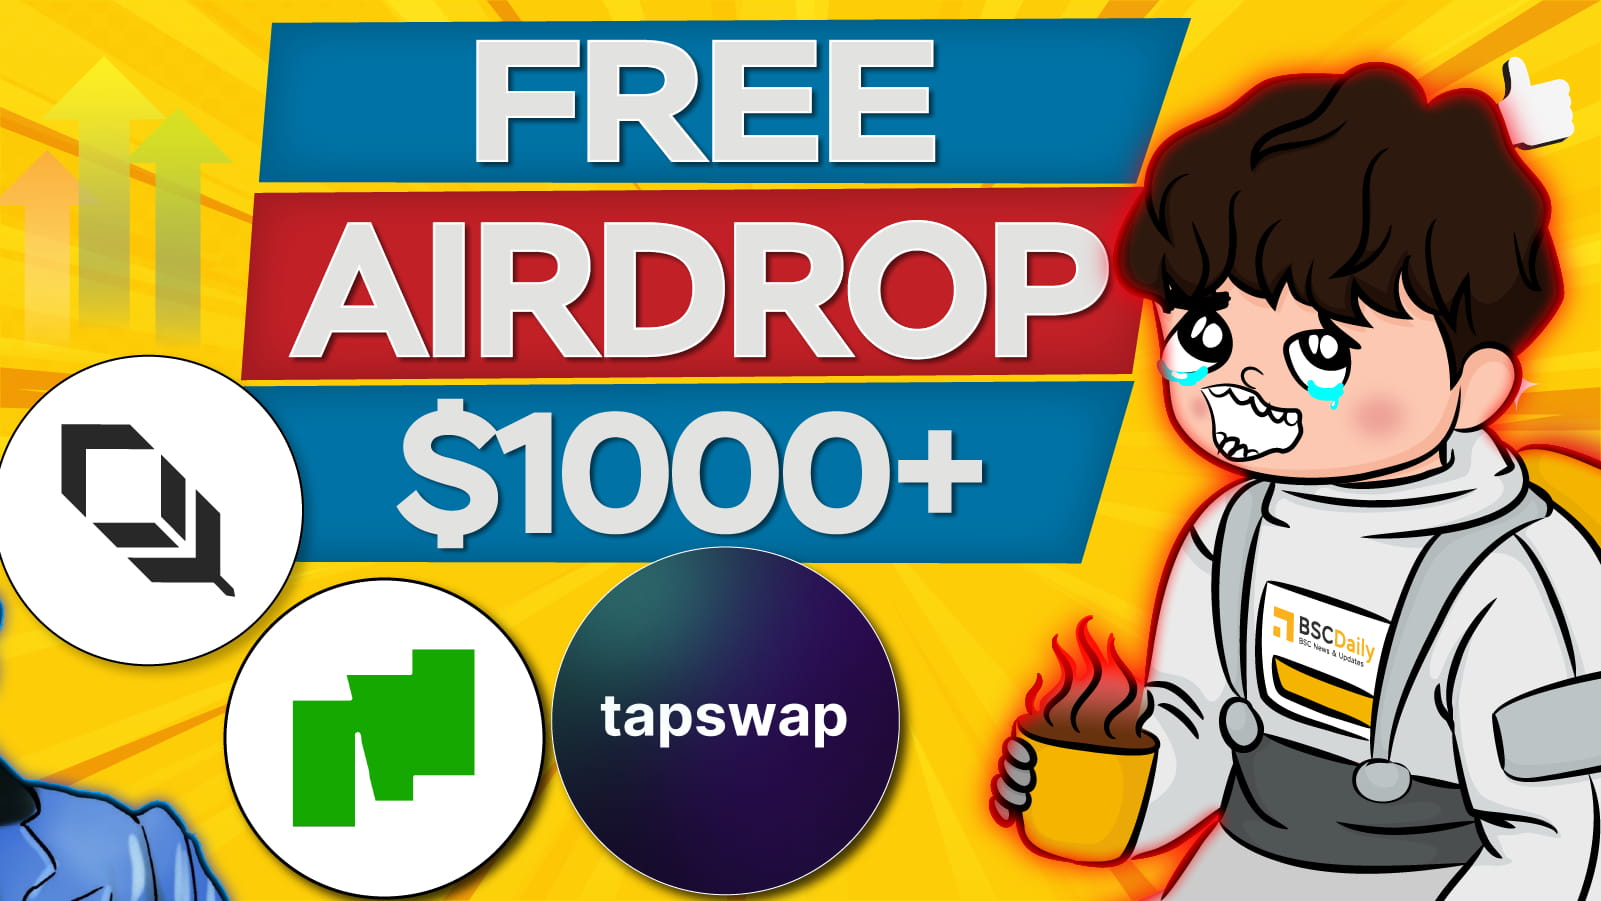 AIDROP $1000+ FOR FREE